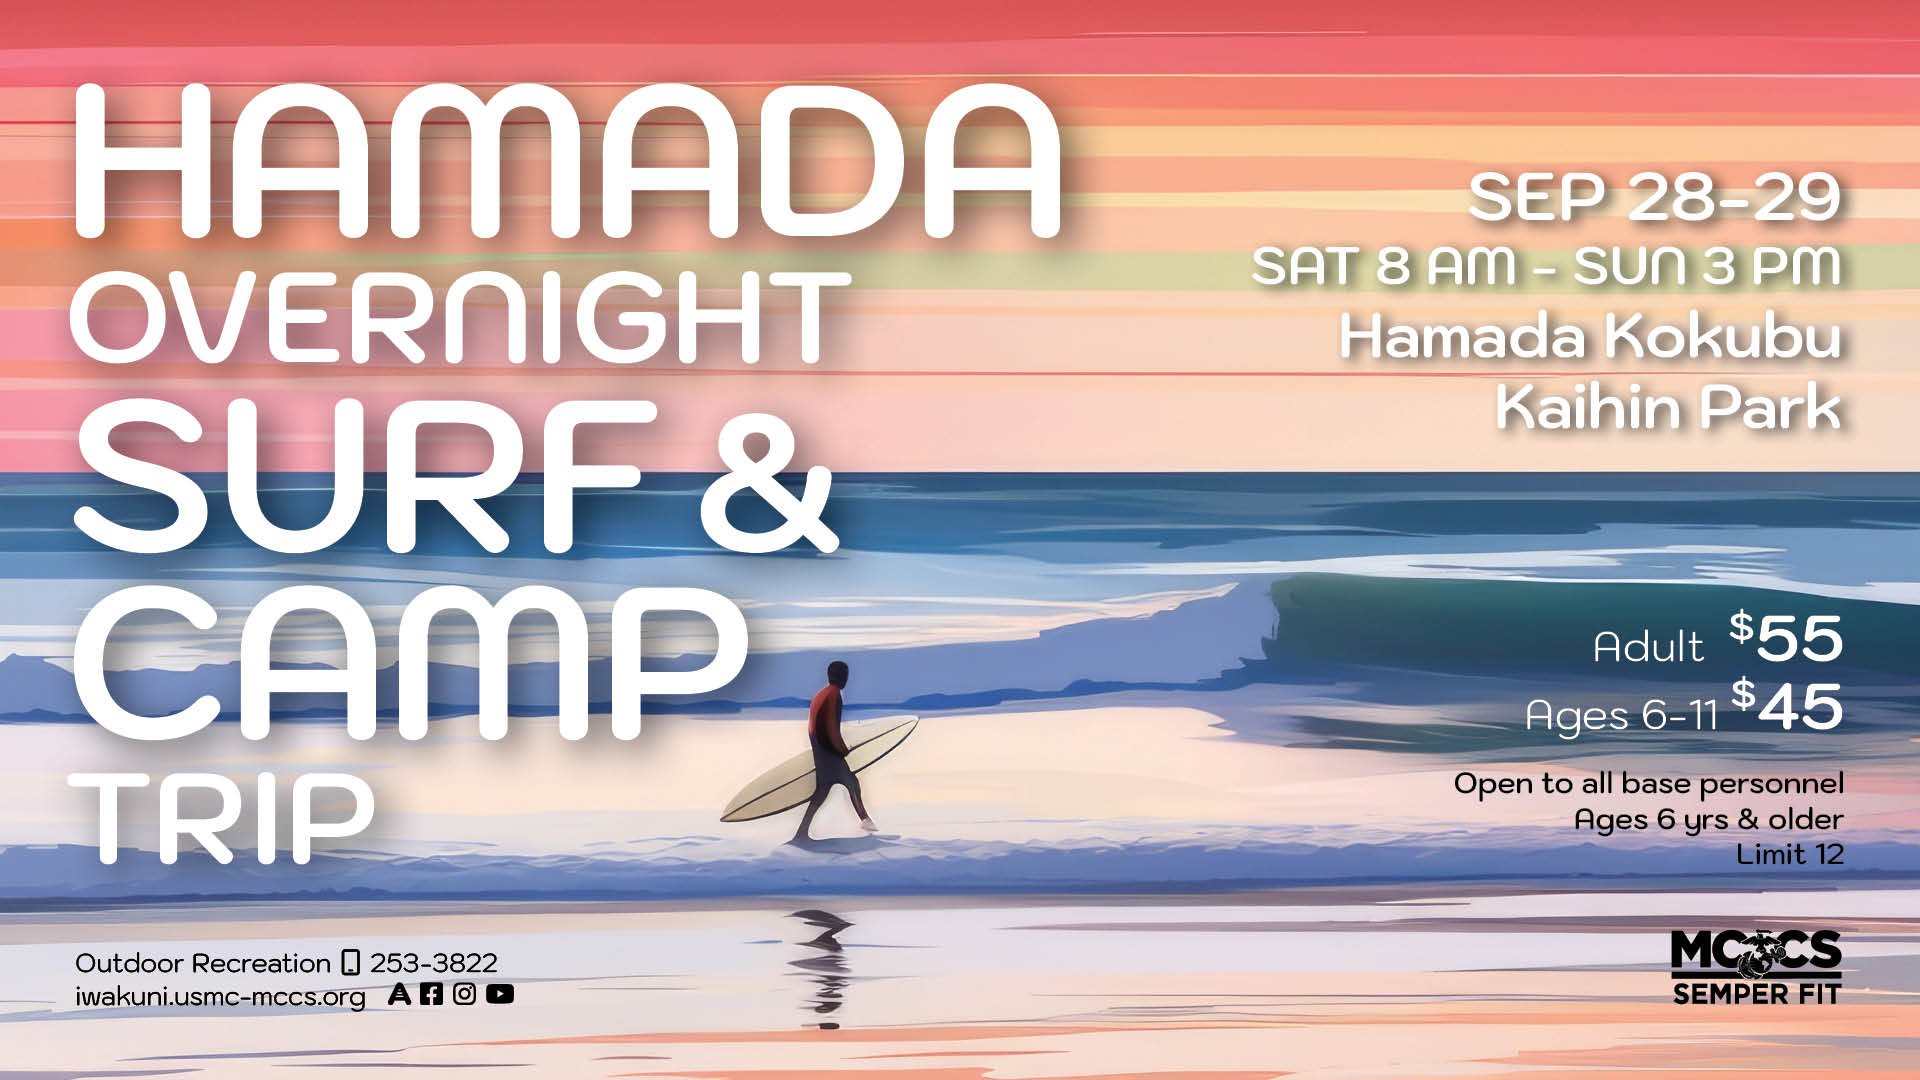 Hamada Beach Overnight Surf & Camp Trip